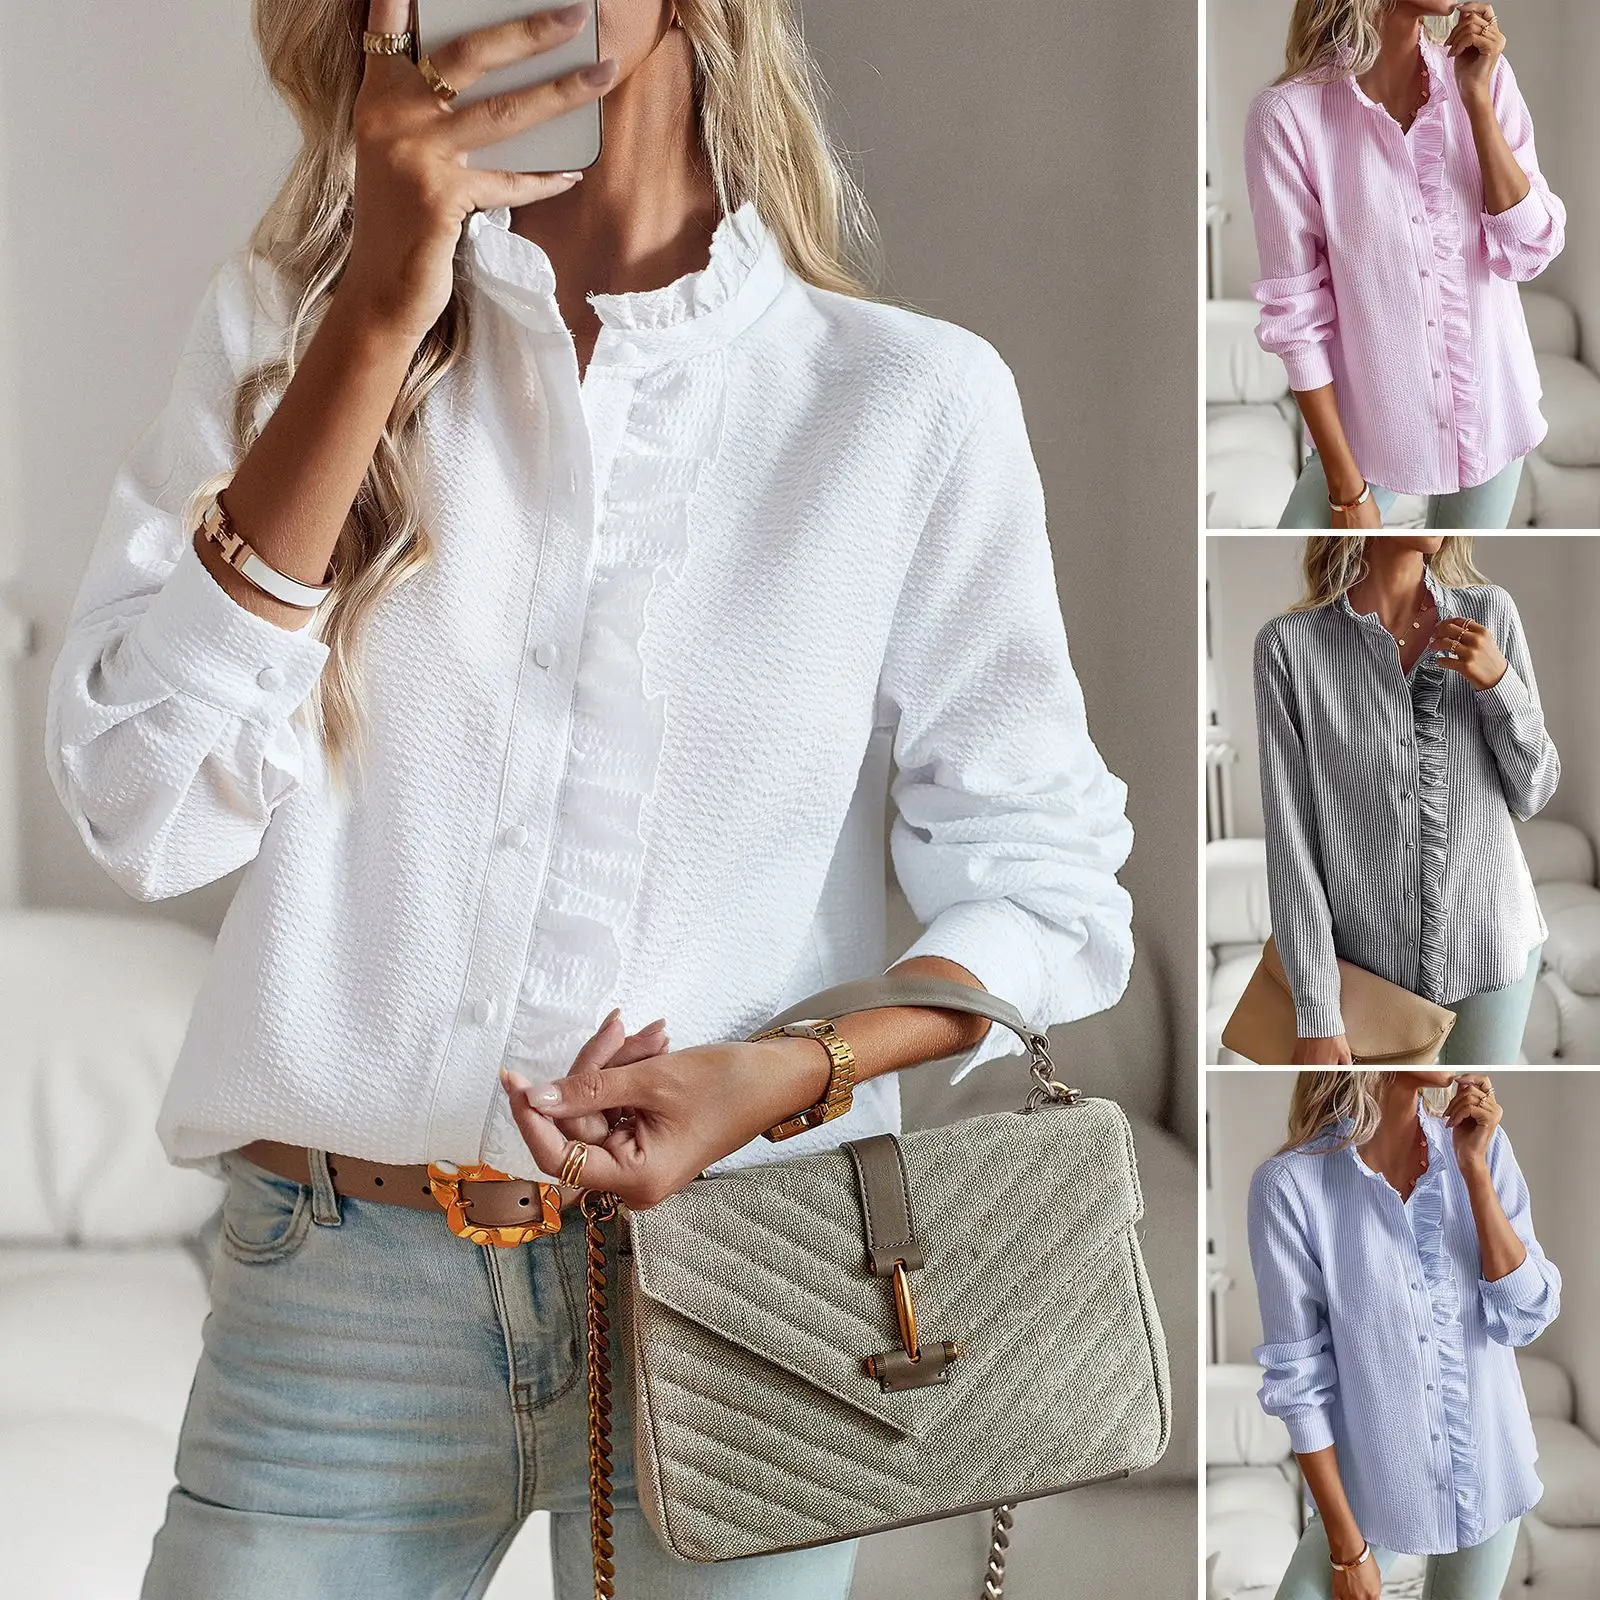 Holesale-Camisa de manga larga de color liso para mujer, tops formales informales a rayas personalizados